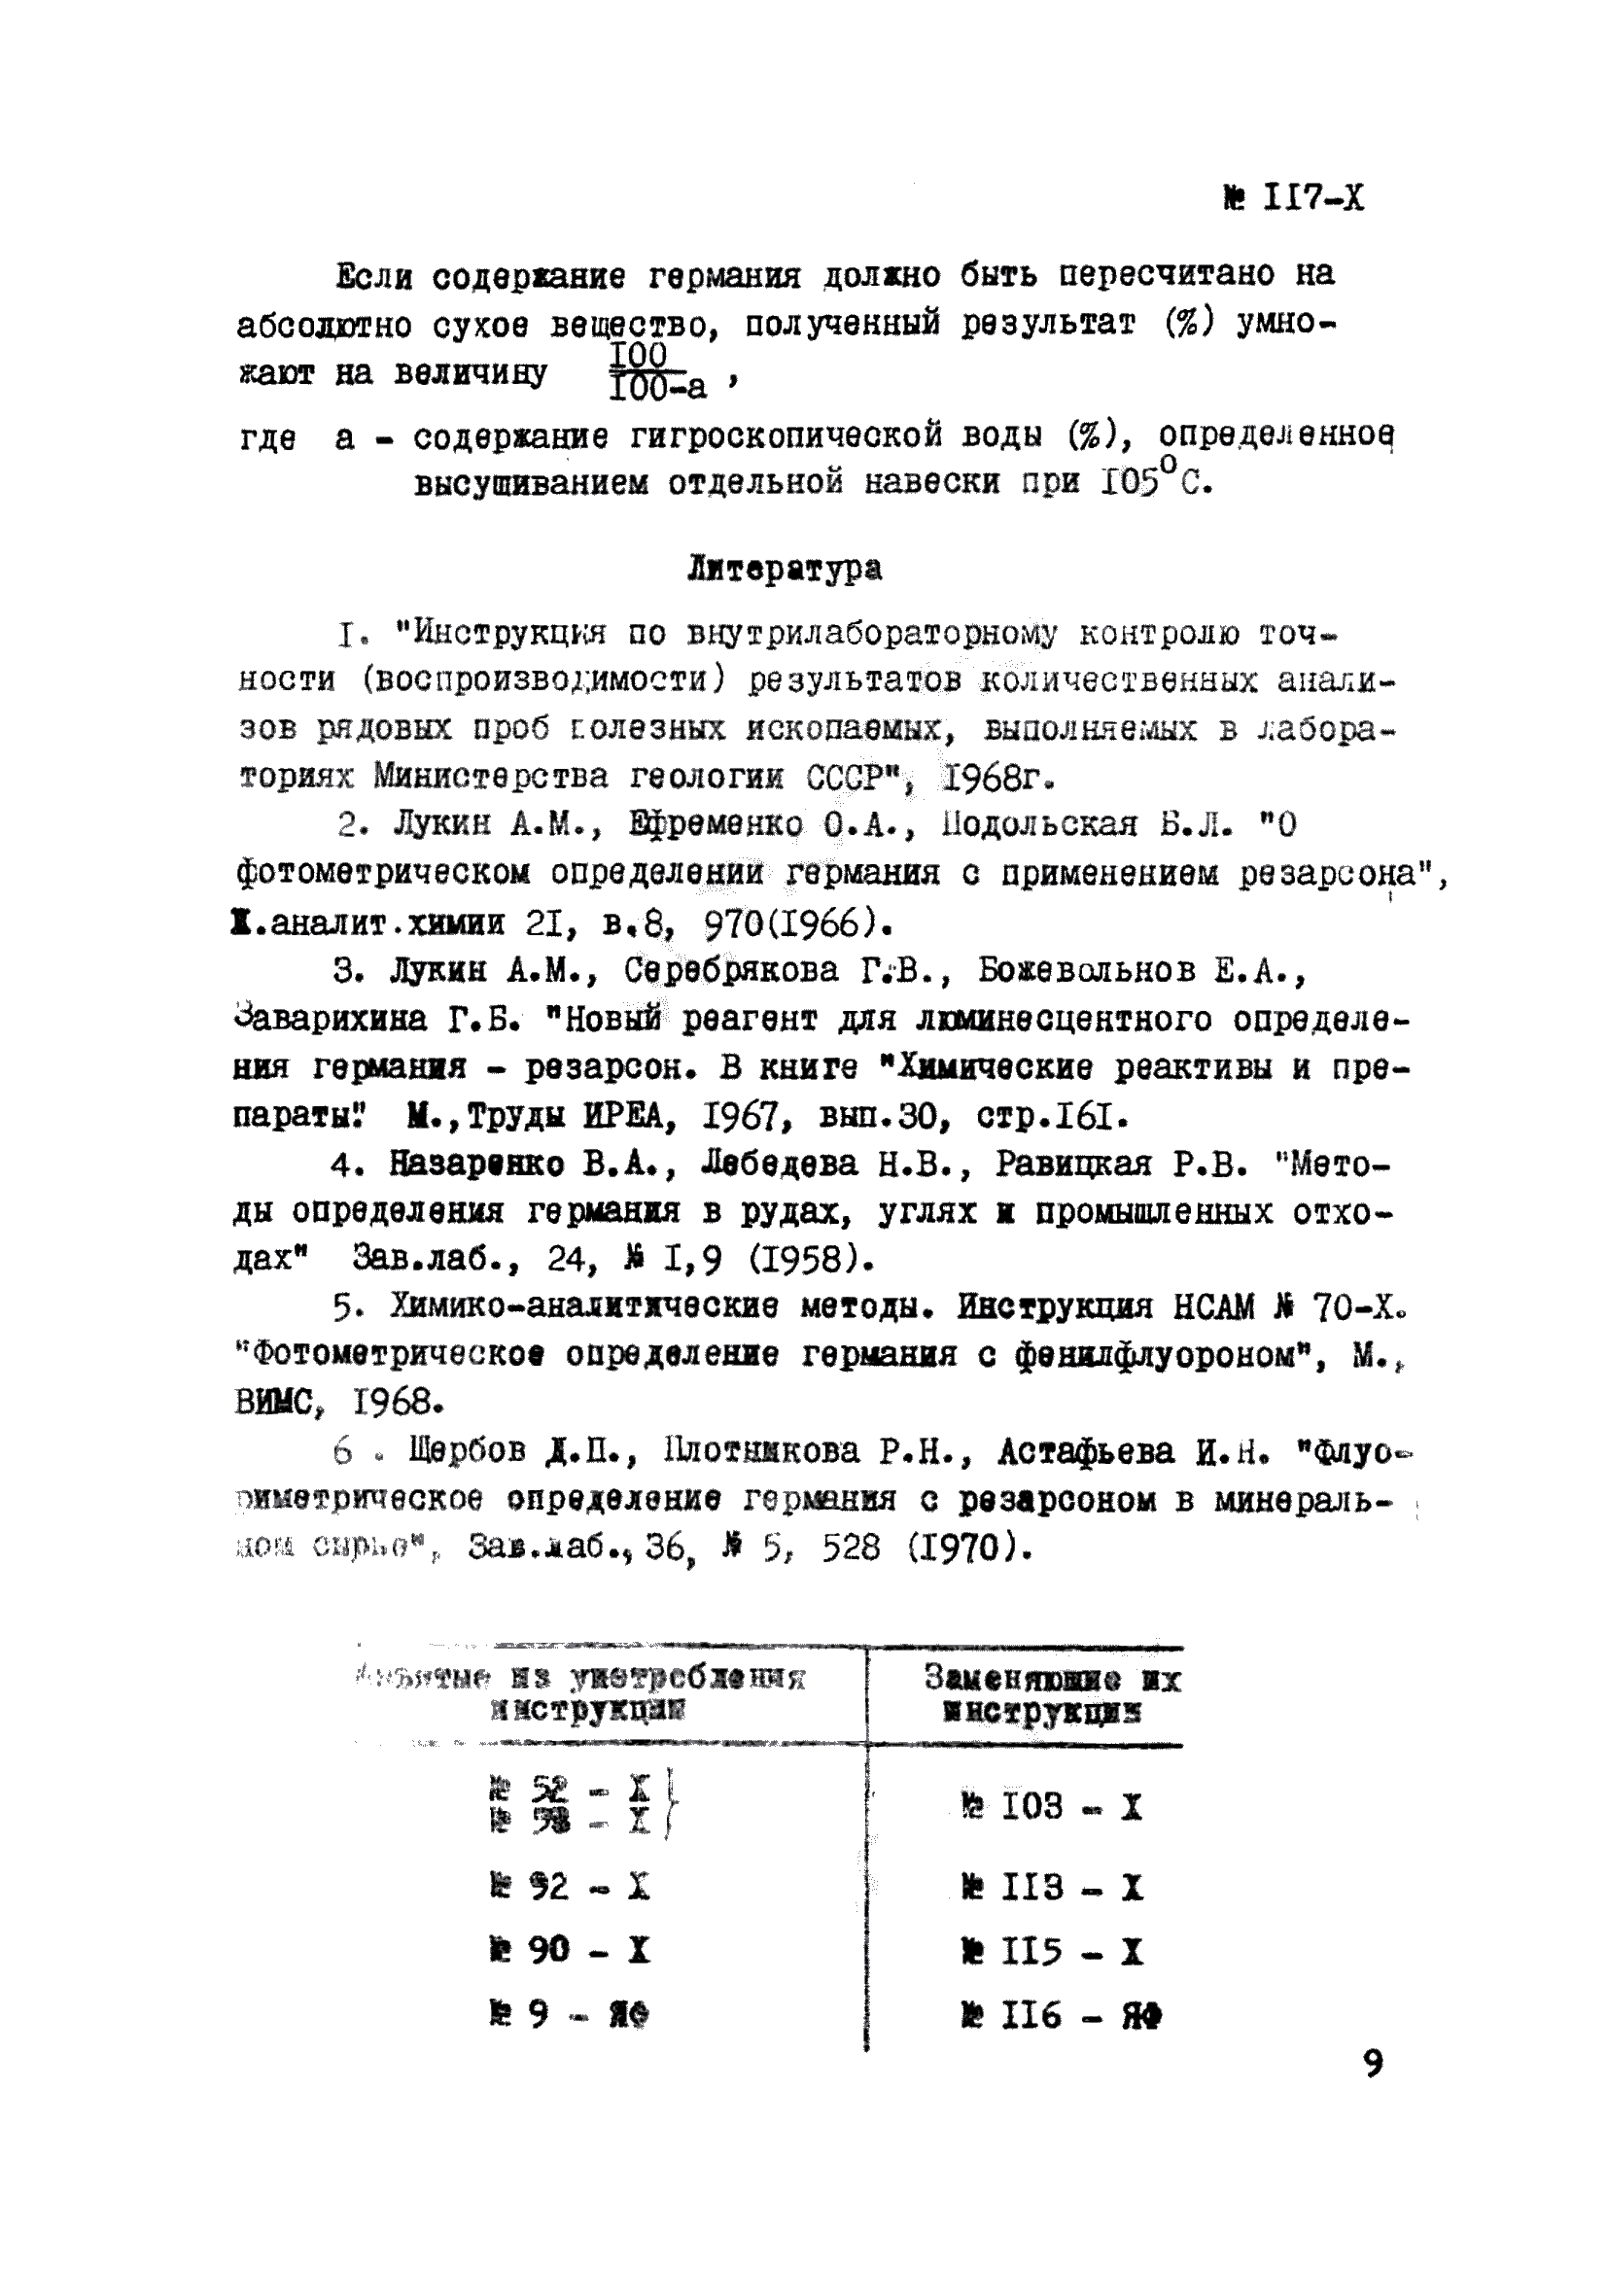 Инструкция НСАМ 117-Х